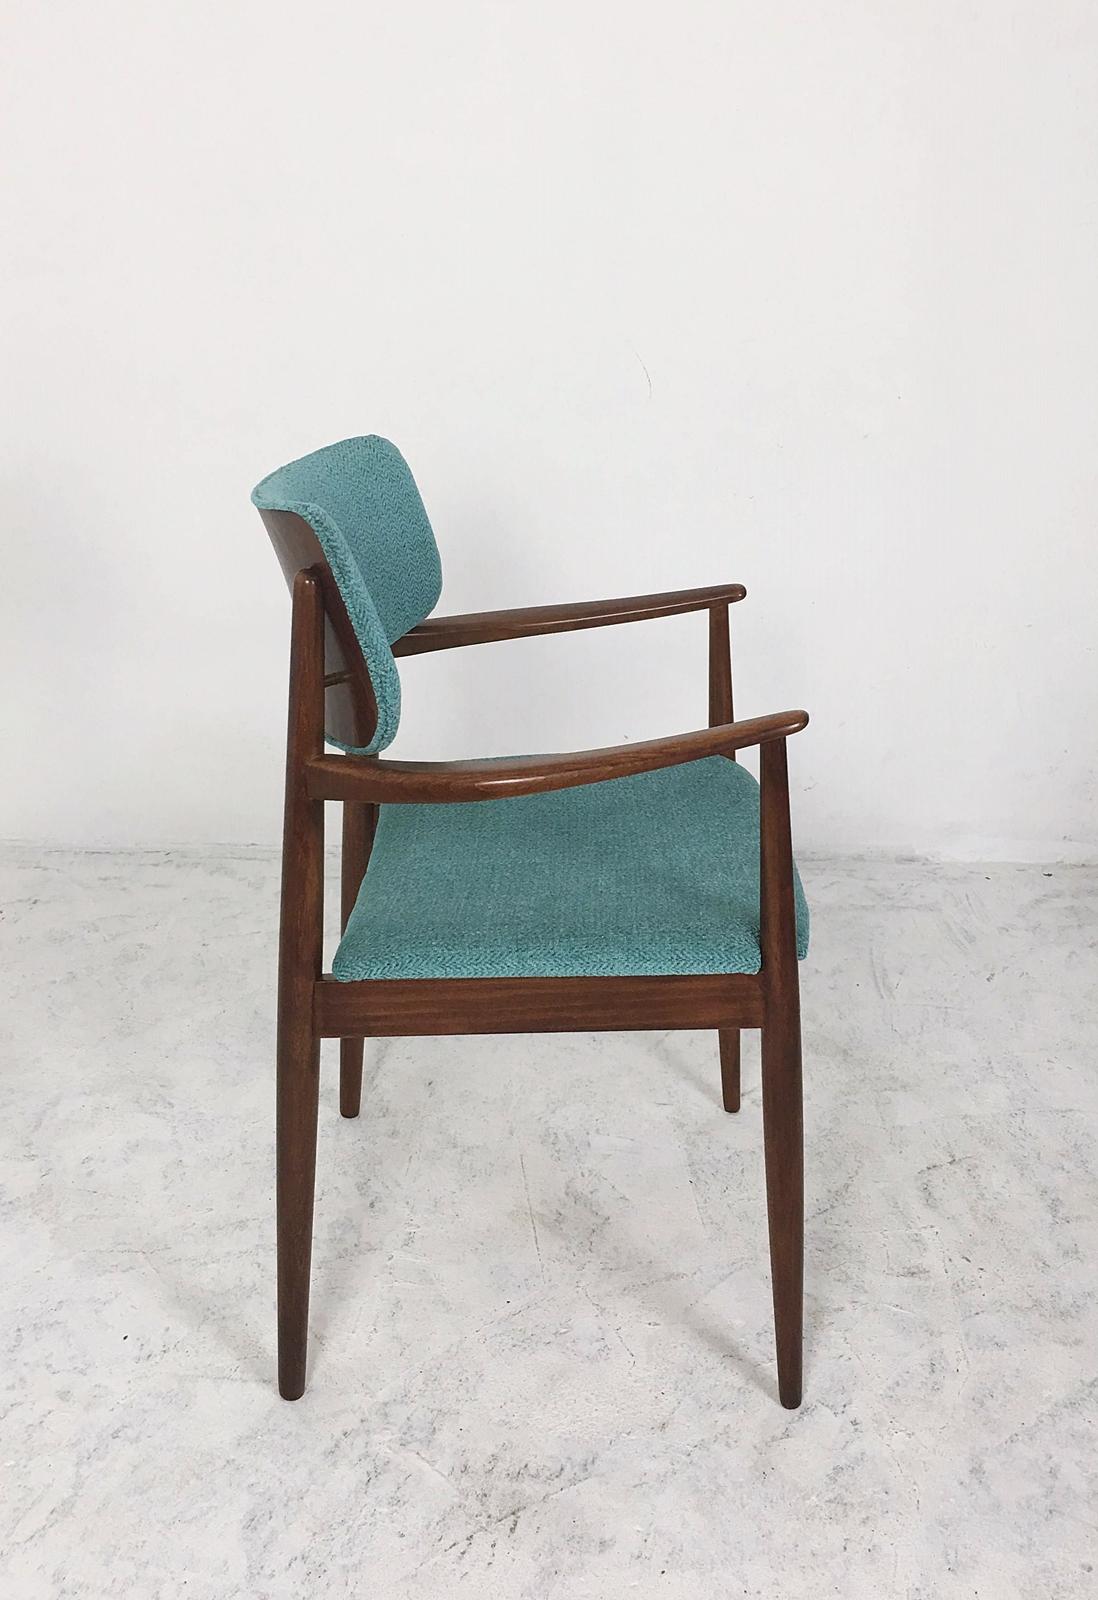 20th Century Wiesner Hager Desk Armchair in Turquoise Tweed Upholstery Austria, 1960s